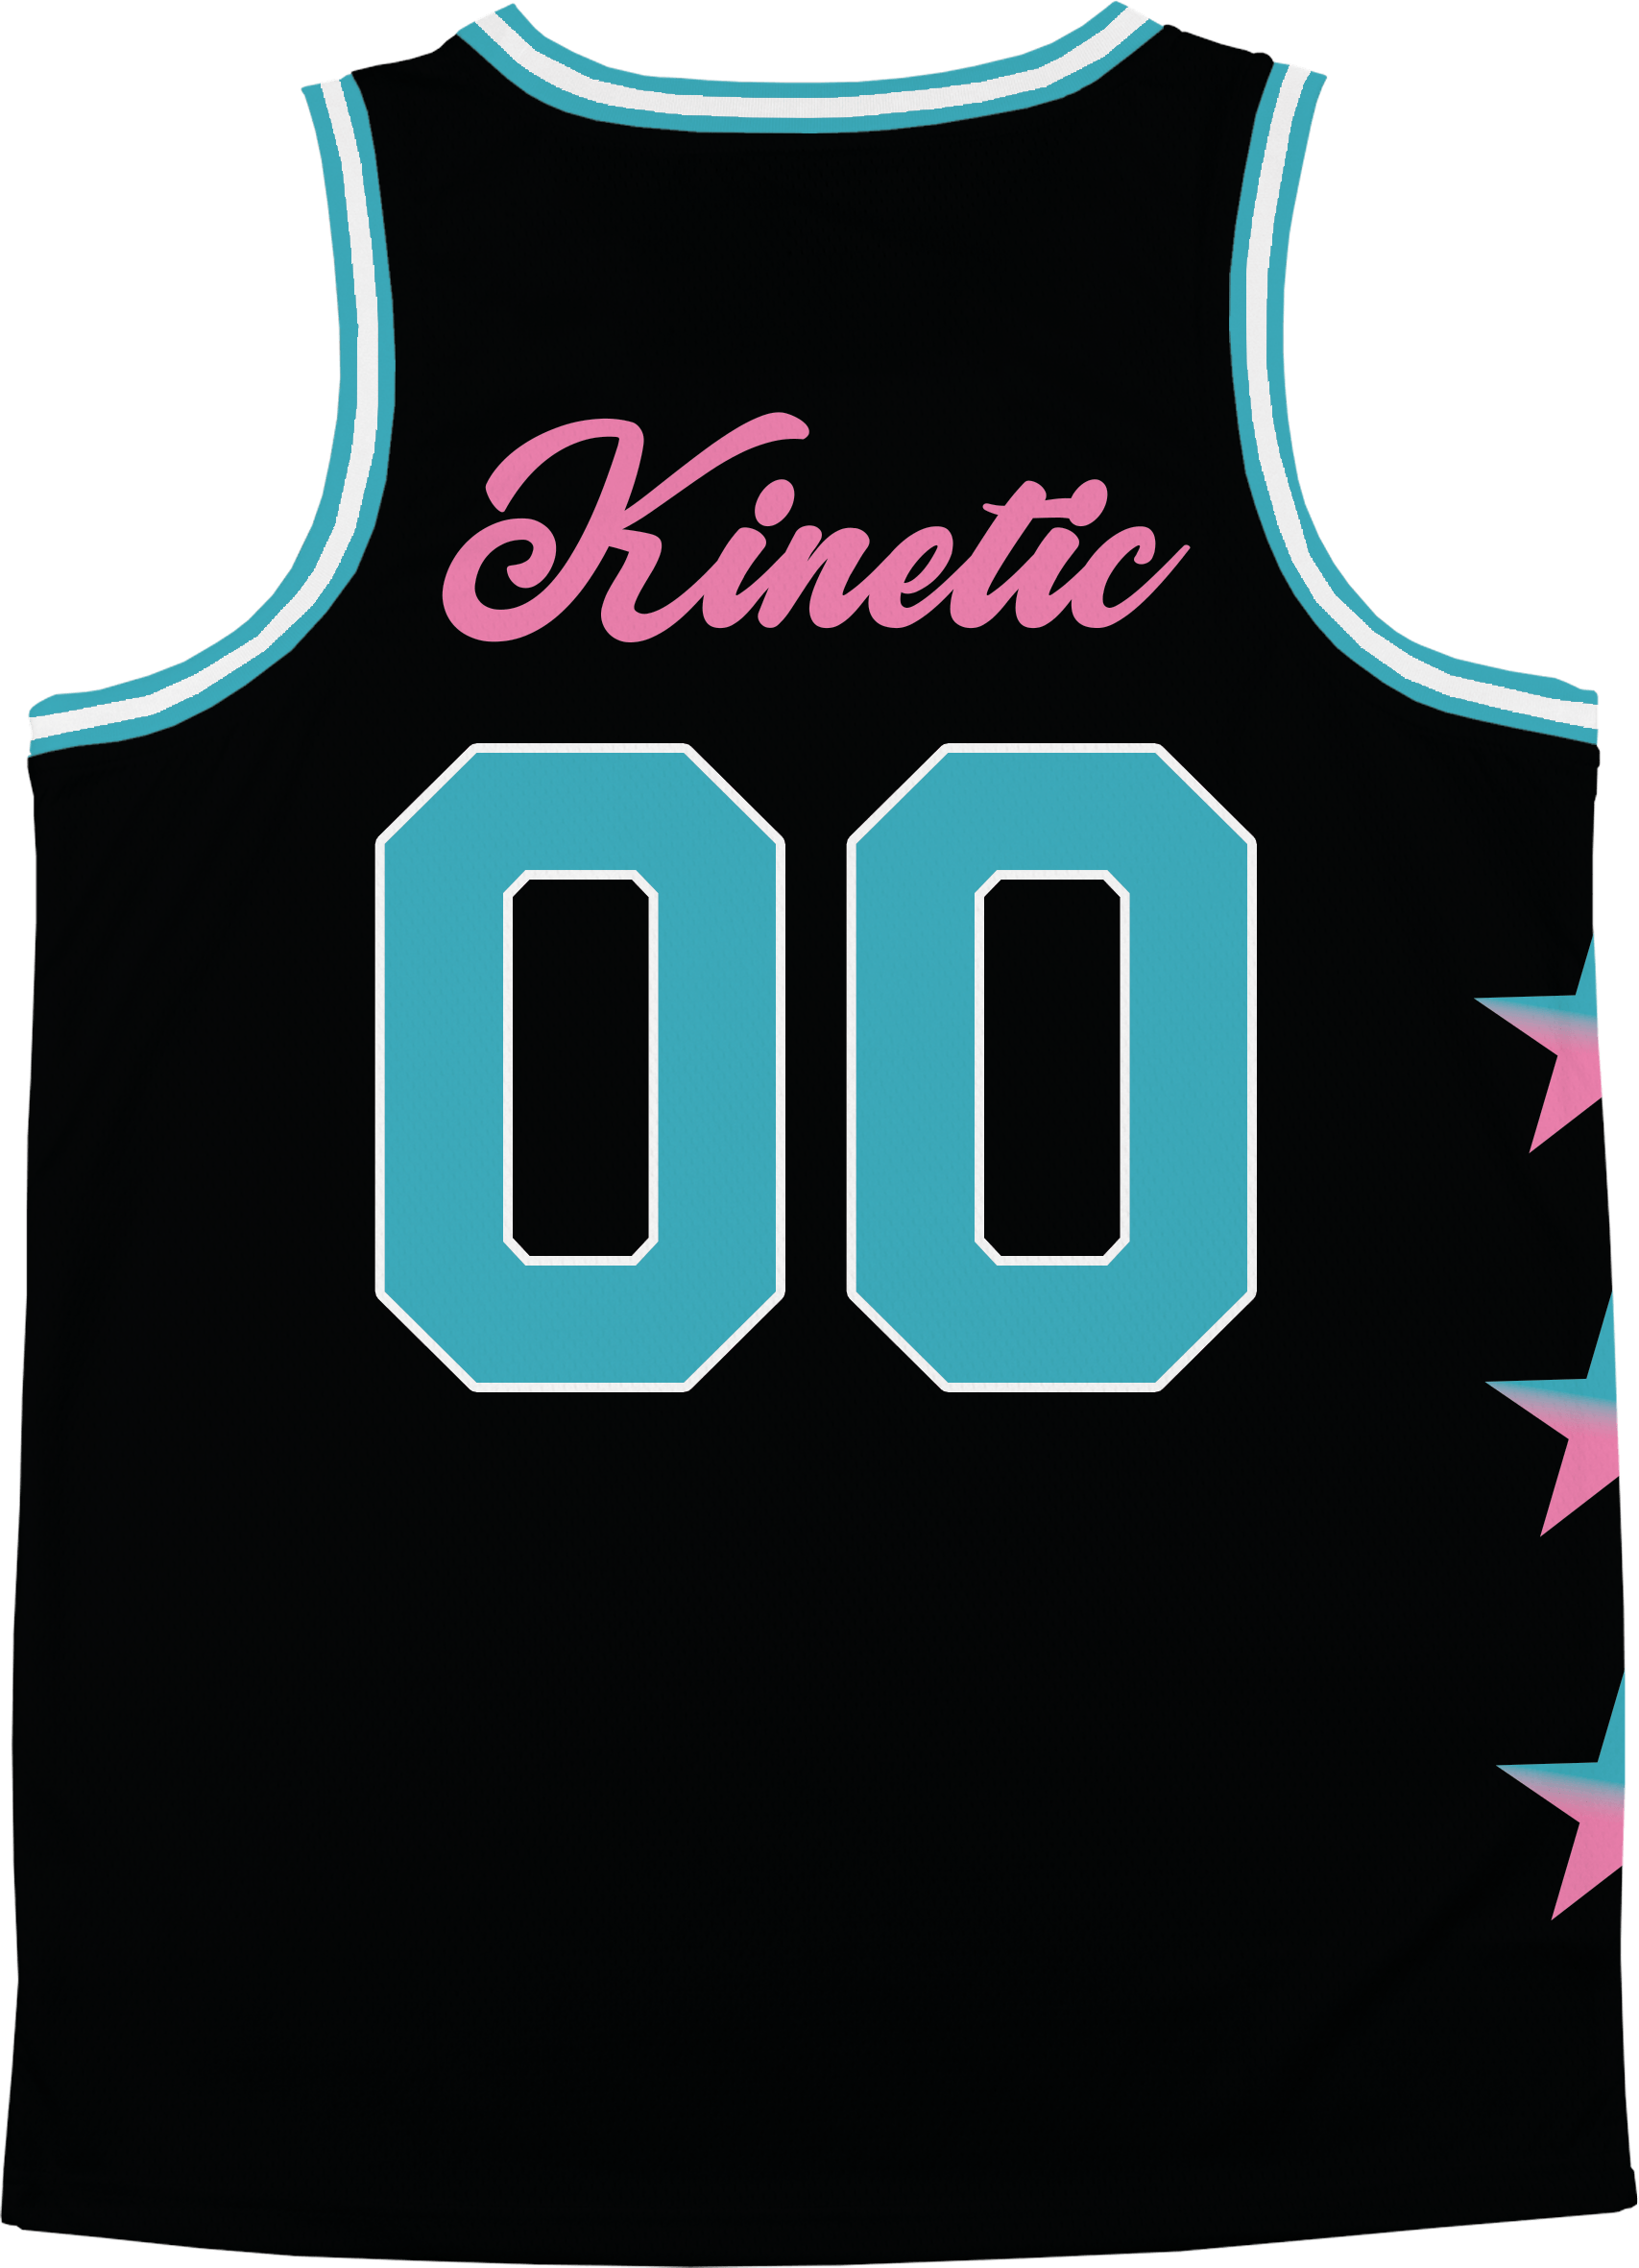 Delta Sigma Phi - Cotton Candy Basketball Jersey Premium Basketball Kinetic Society LLC 